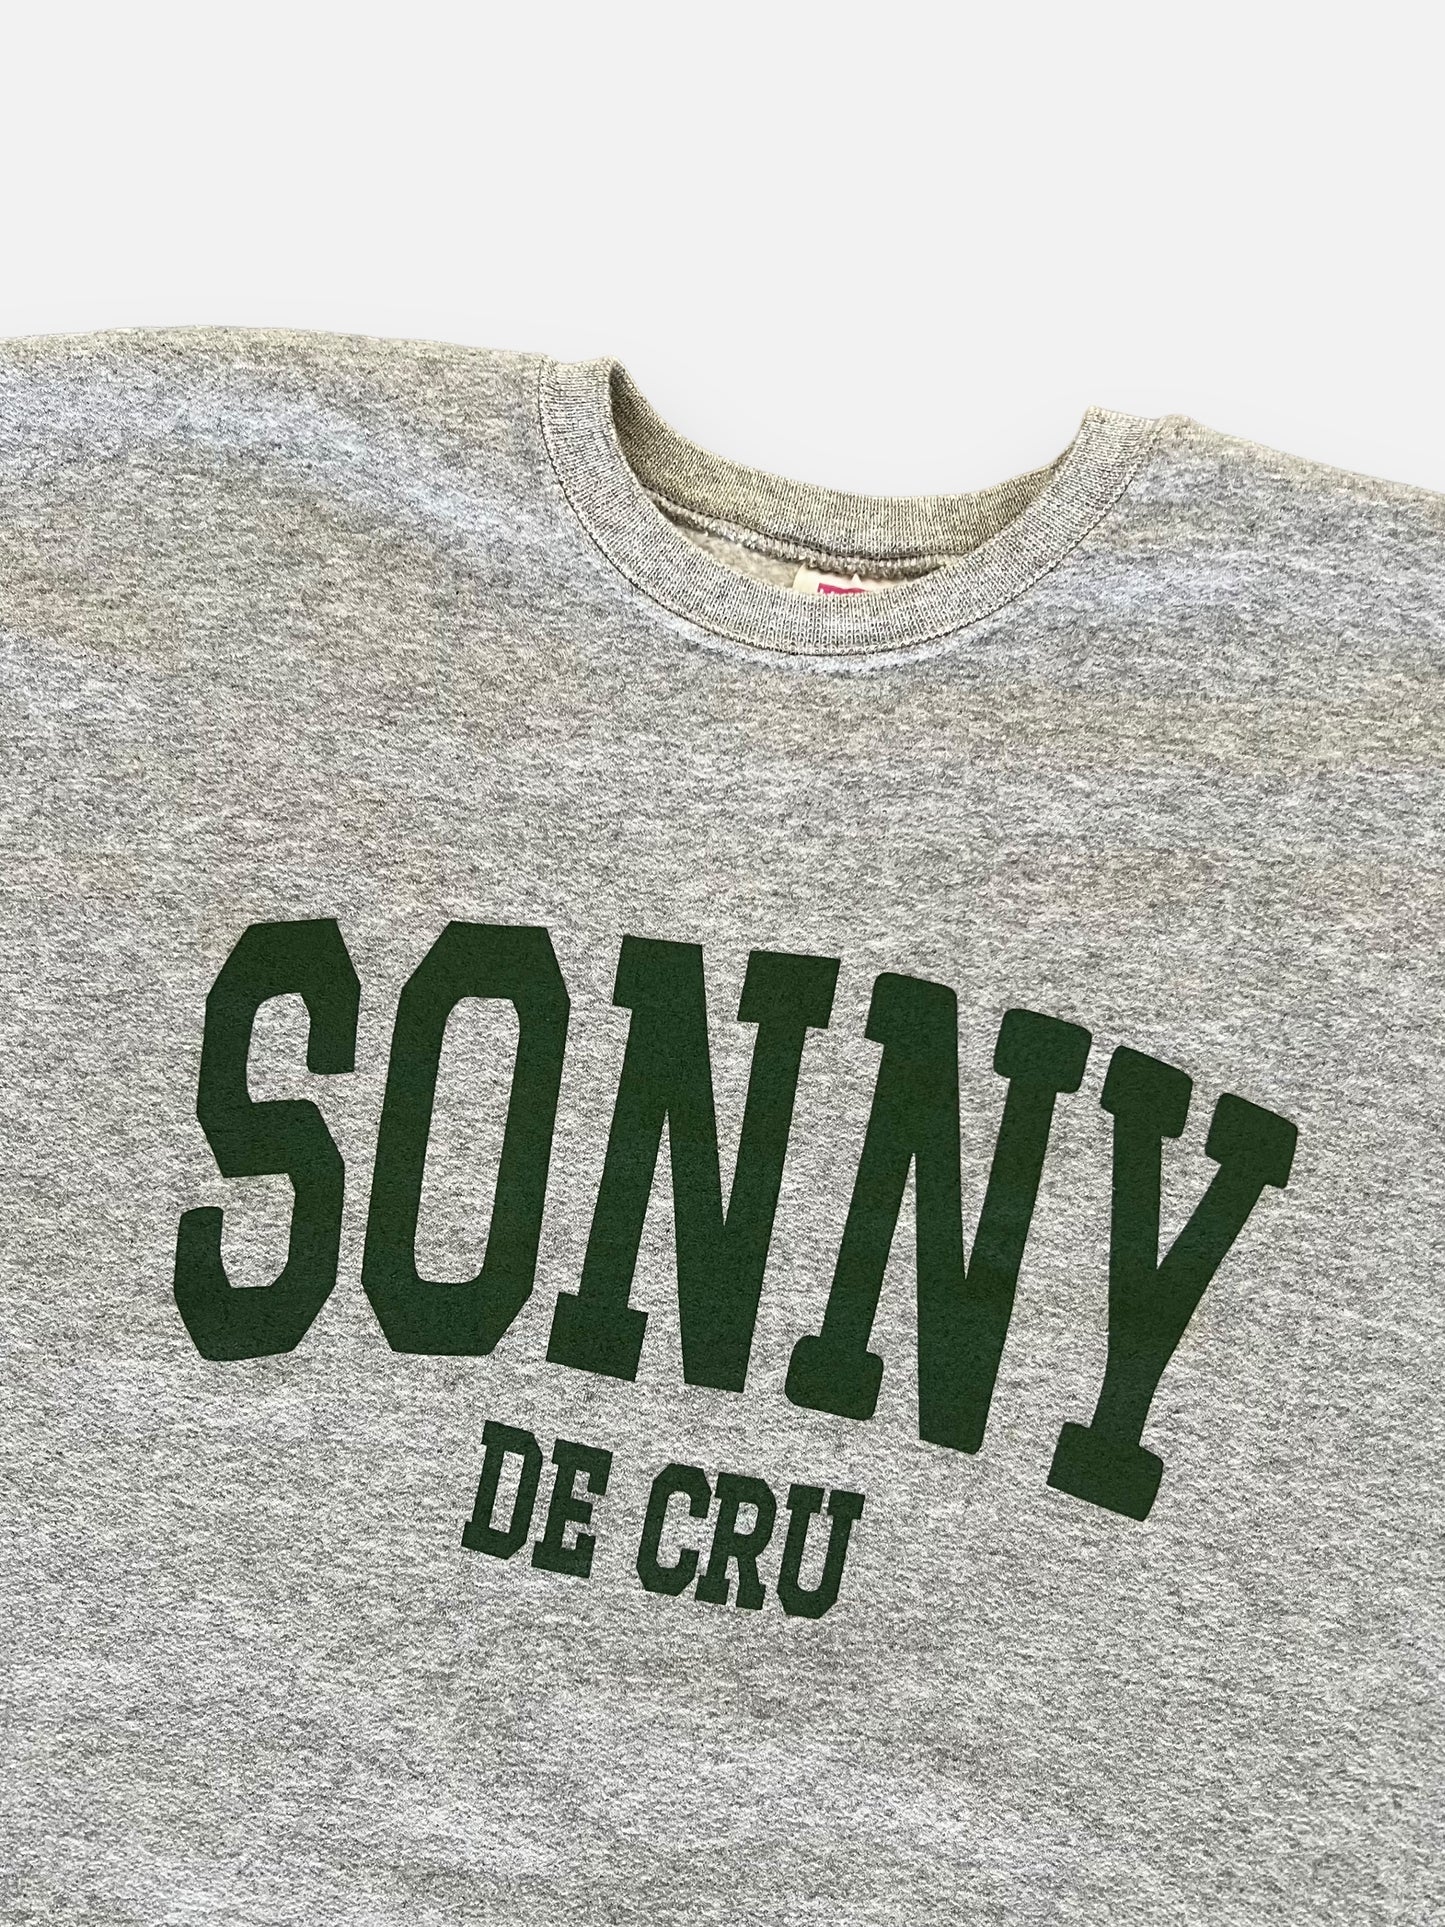 Sonny University 'De Cru' Rework Crew